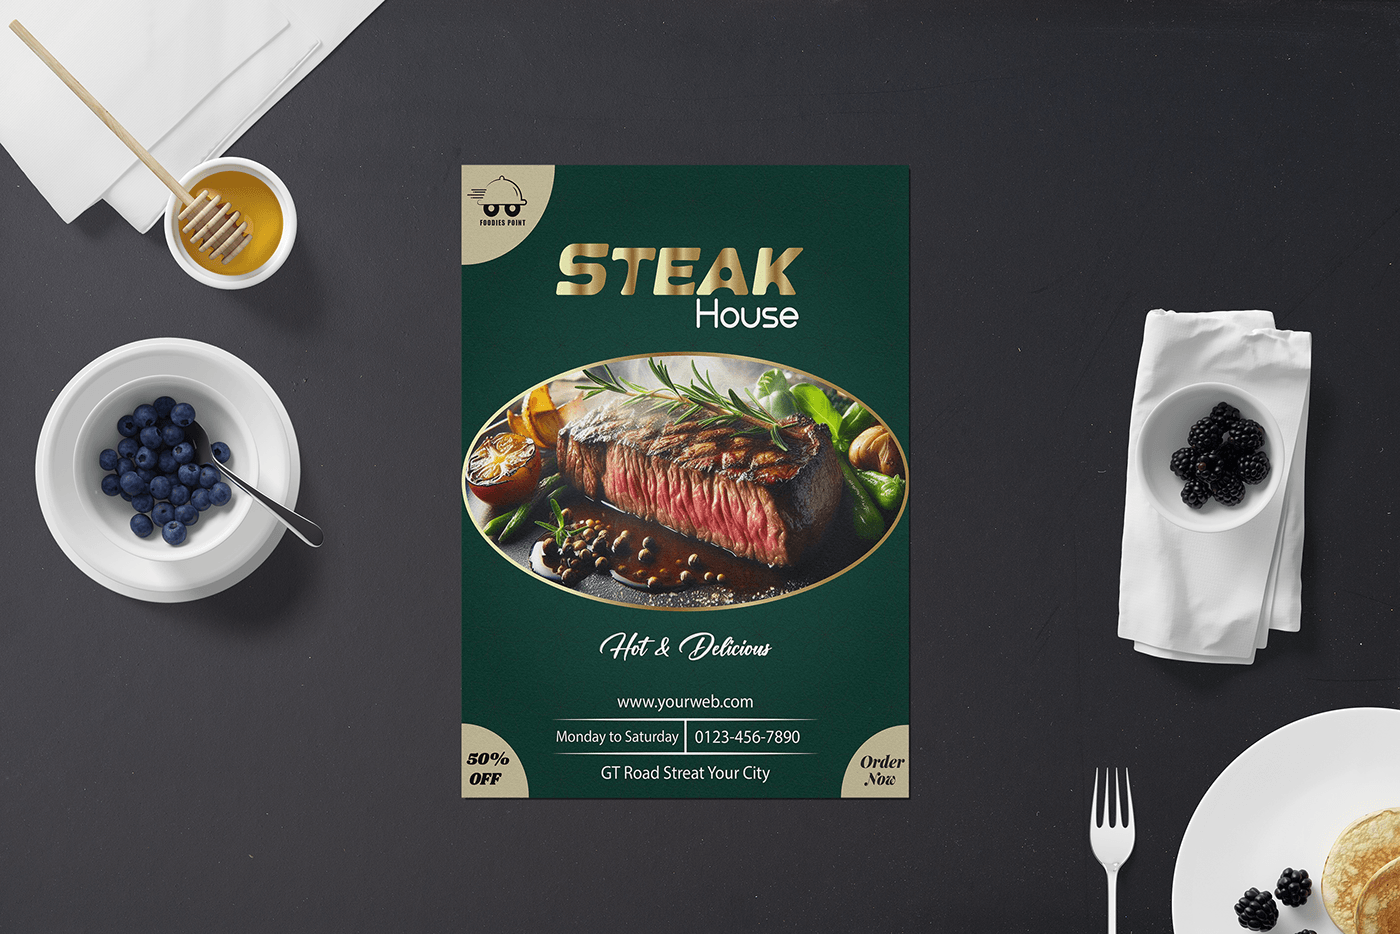 #steakhouse #Branding #restaurant #dinner #foodie #Foodphotography  #grill   #LUNCH #meat #steak  